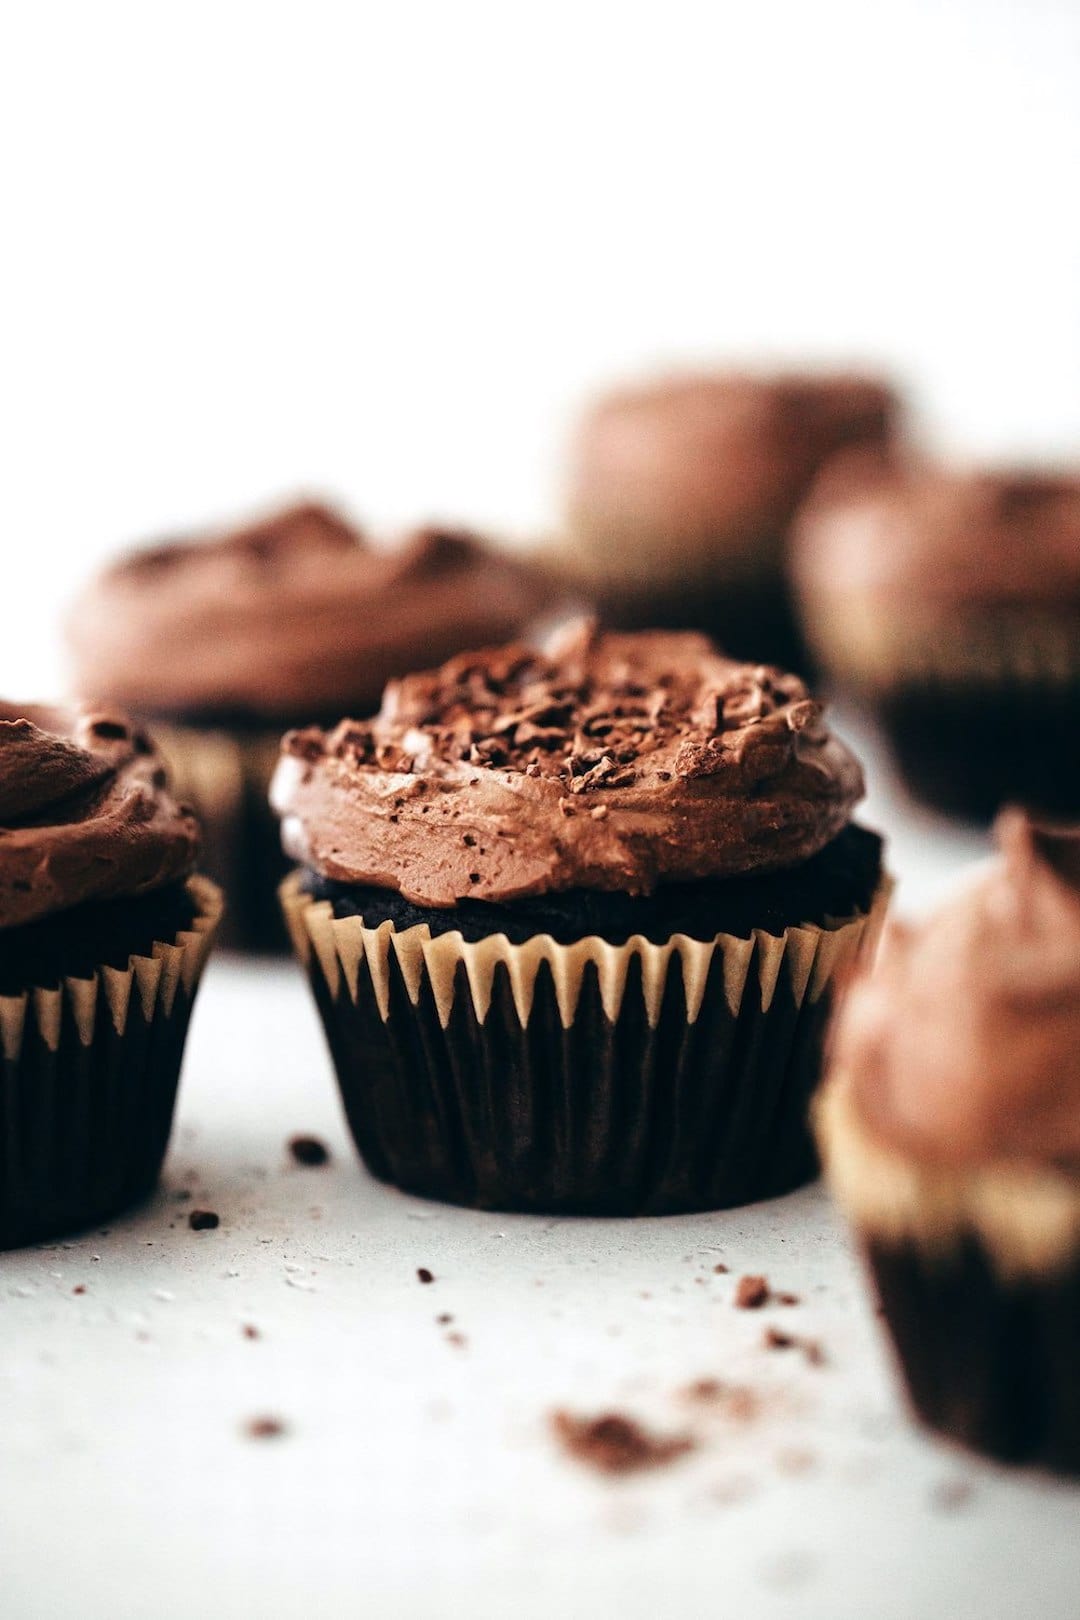 12 Super Easy Plant Based Desserts - Easy Vegan Paleo Chocolate Cupcakes